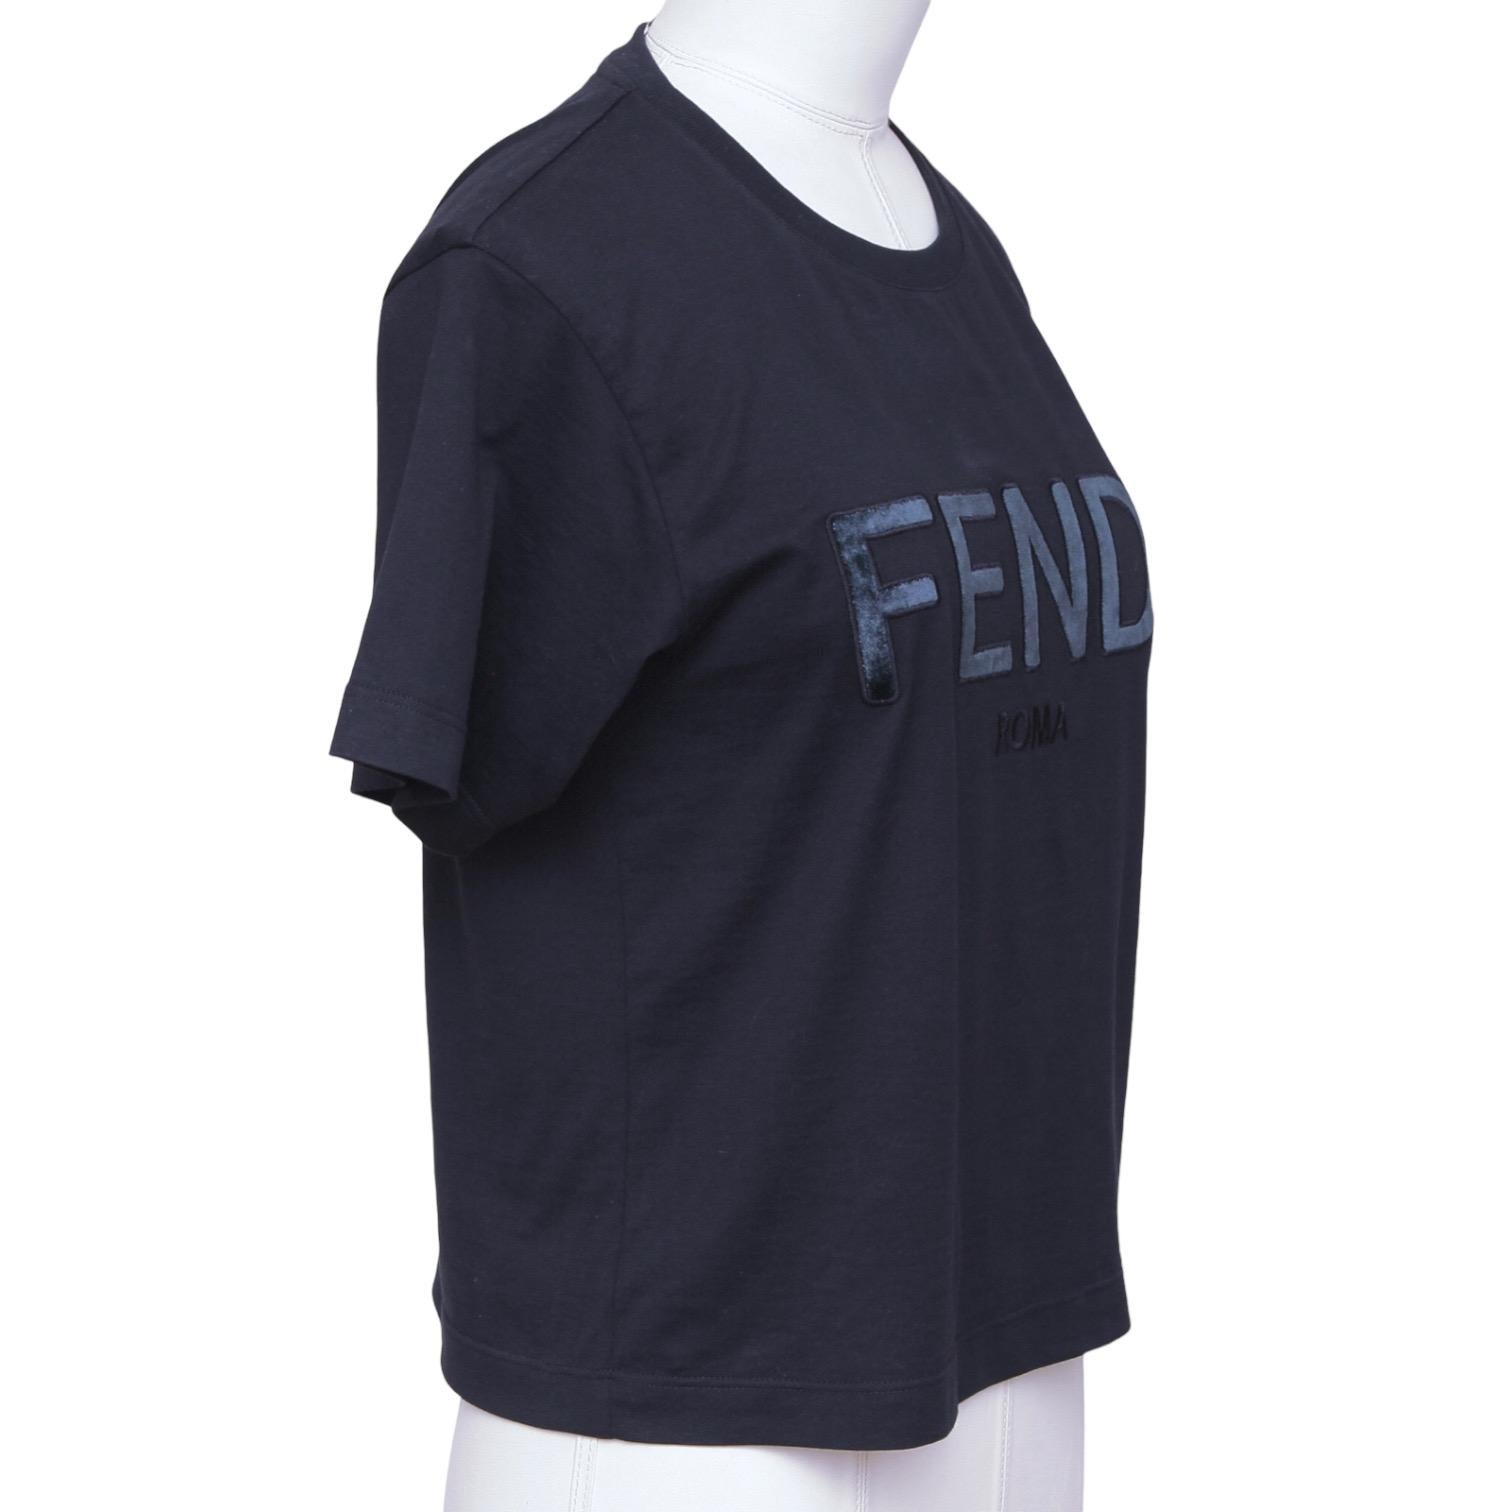 GUARANTEED AUTHENTIC FENDI CROPPED LOGO T-SHIRT

Design:
- Navy blue t-shirt.
- Crew neck.
- Short sleeve.
- Velvet logo.
- Slip on.

Size: XS

Material: 100% Cotton

Measurements (Approximate laid flat):
- Shoulder to Shoulder, 15.5